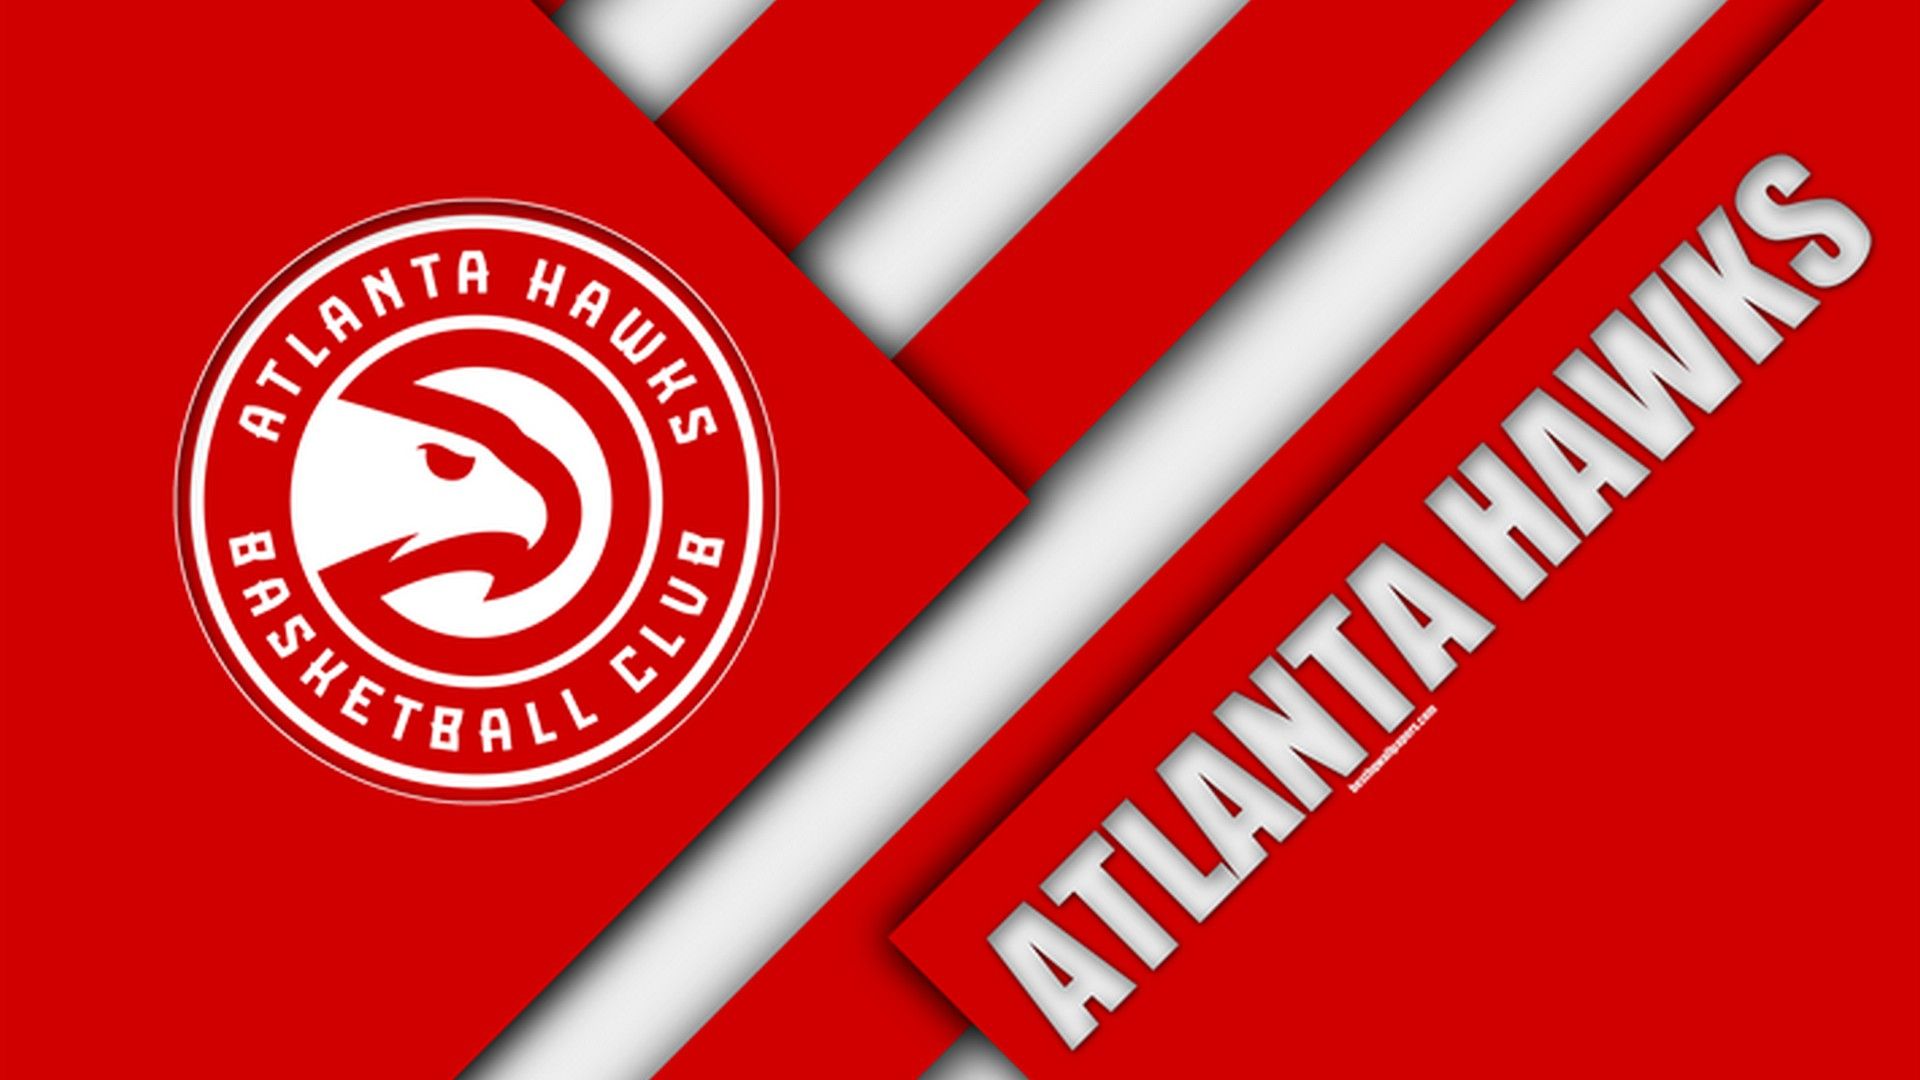 Wallpaper Atlanta Hawks Basketball Wallpaper. Atlanta hawks, Basketball wallpaper, Material design